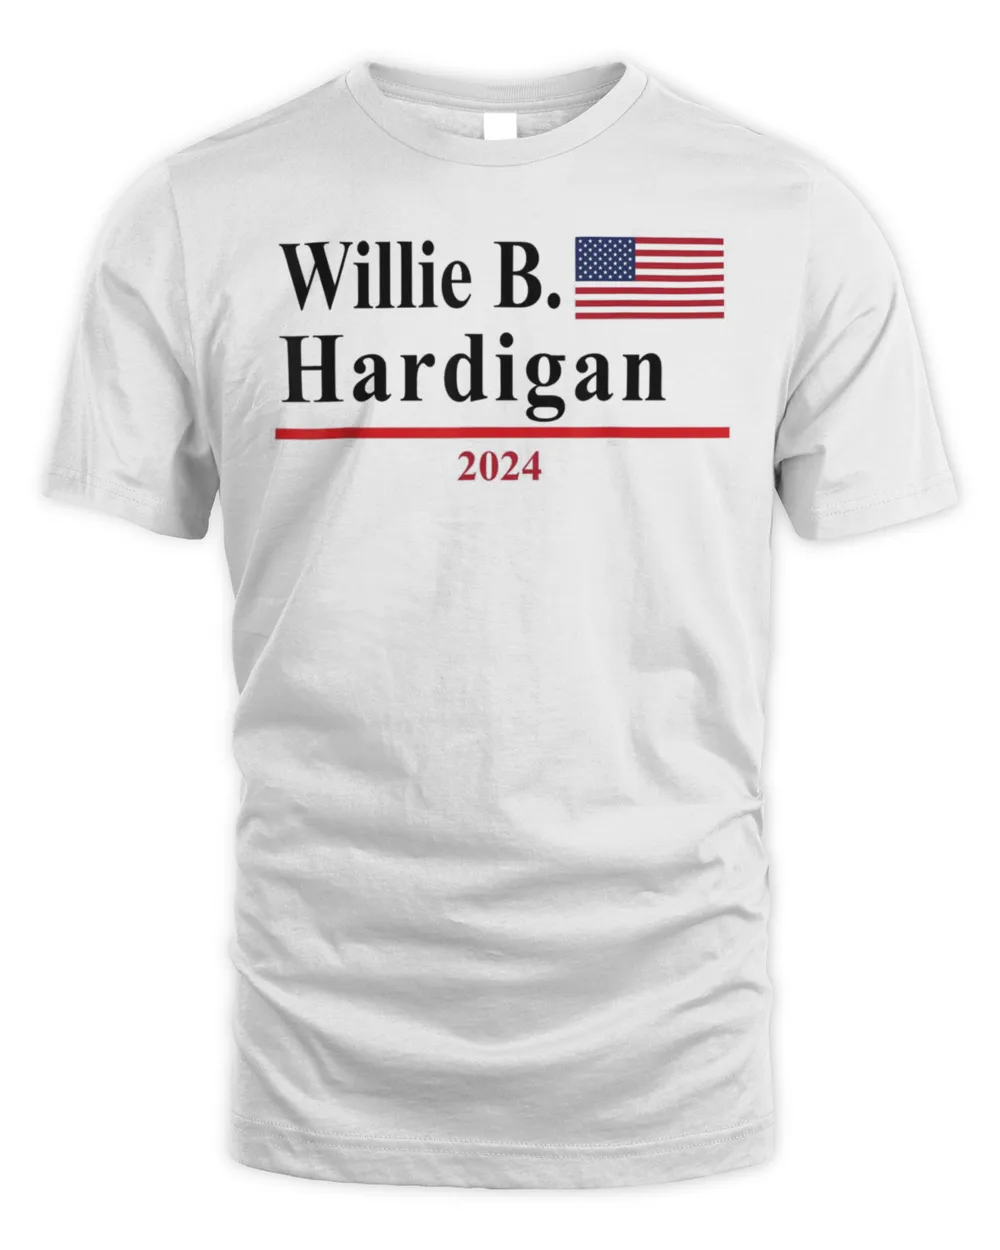 Willie B. Hardigan Presidential Election 2024 Parody T-Shirt